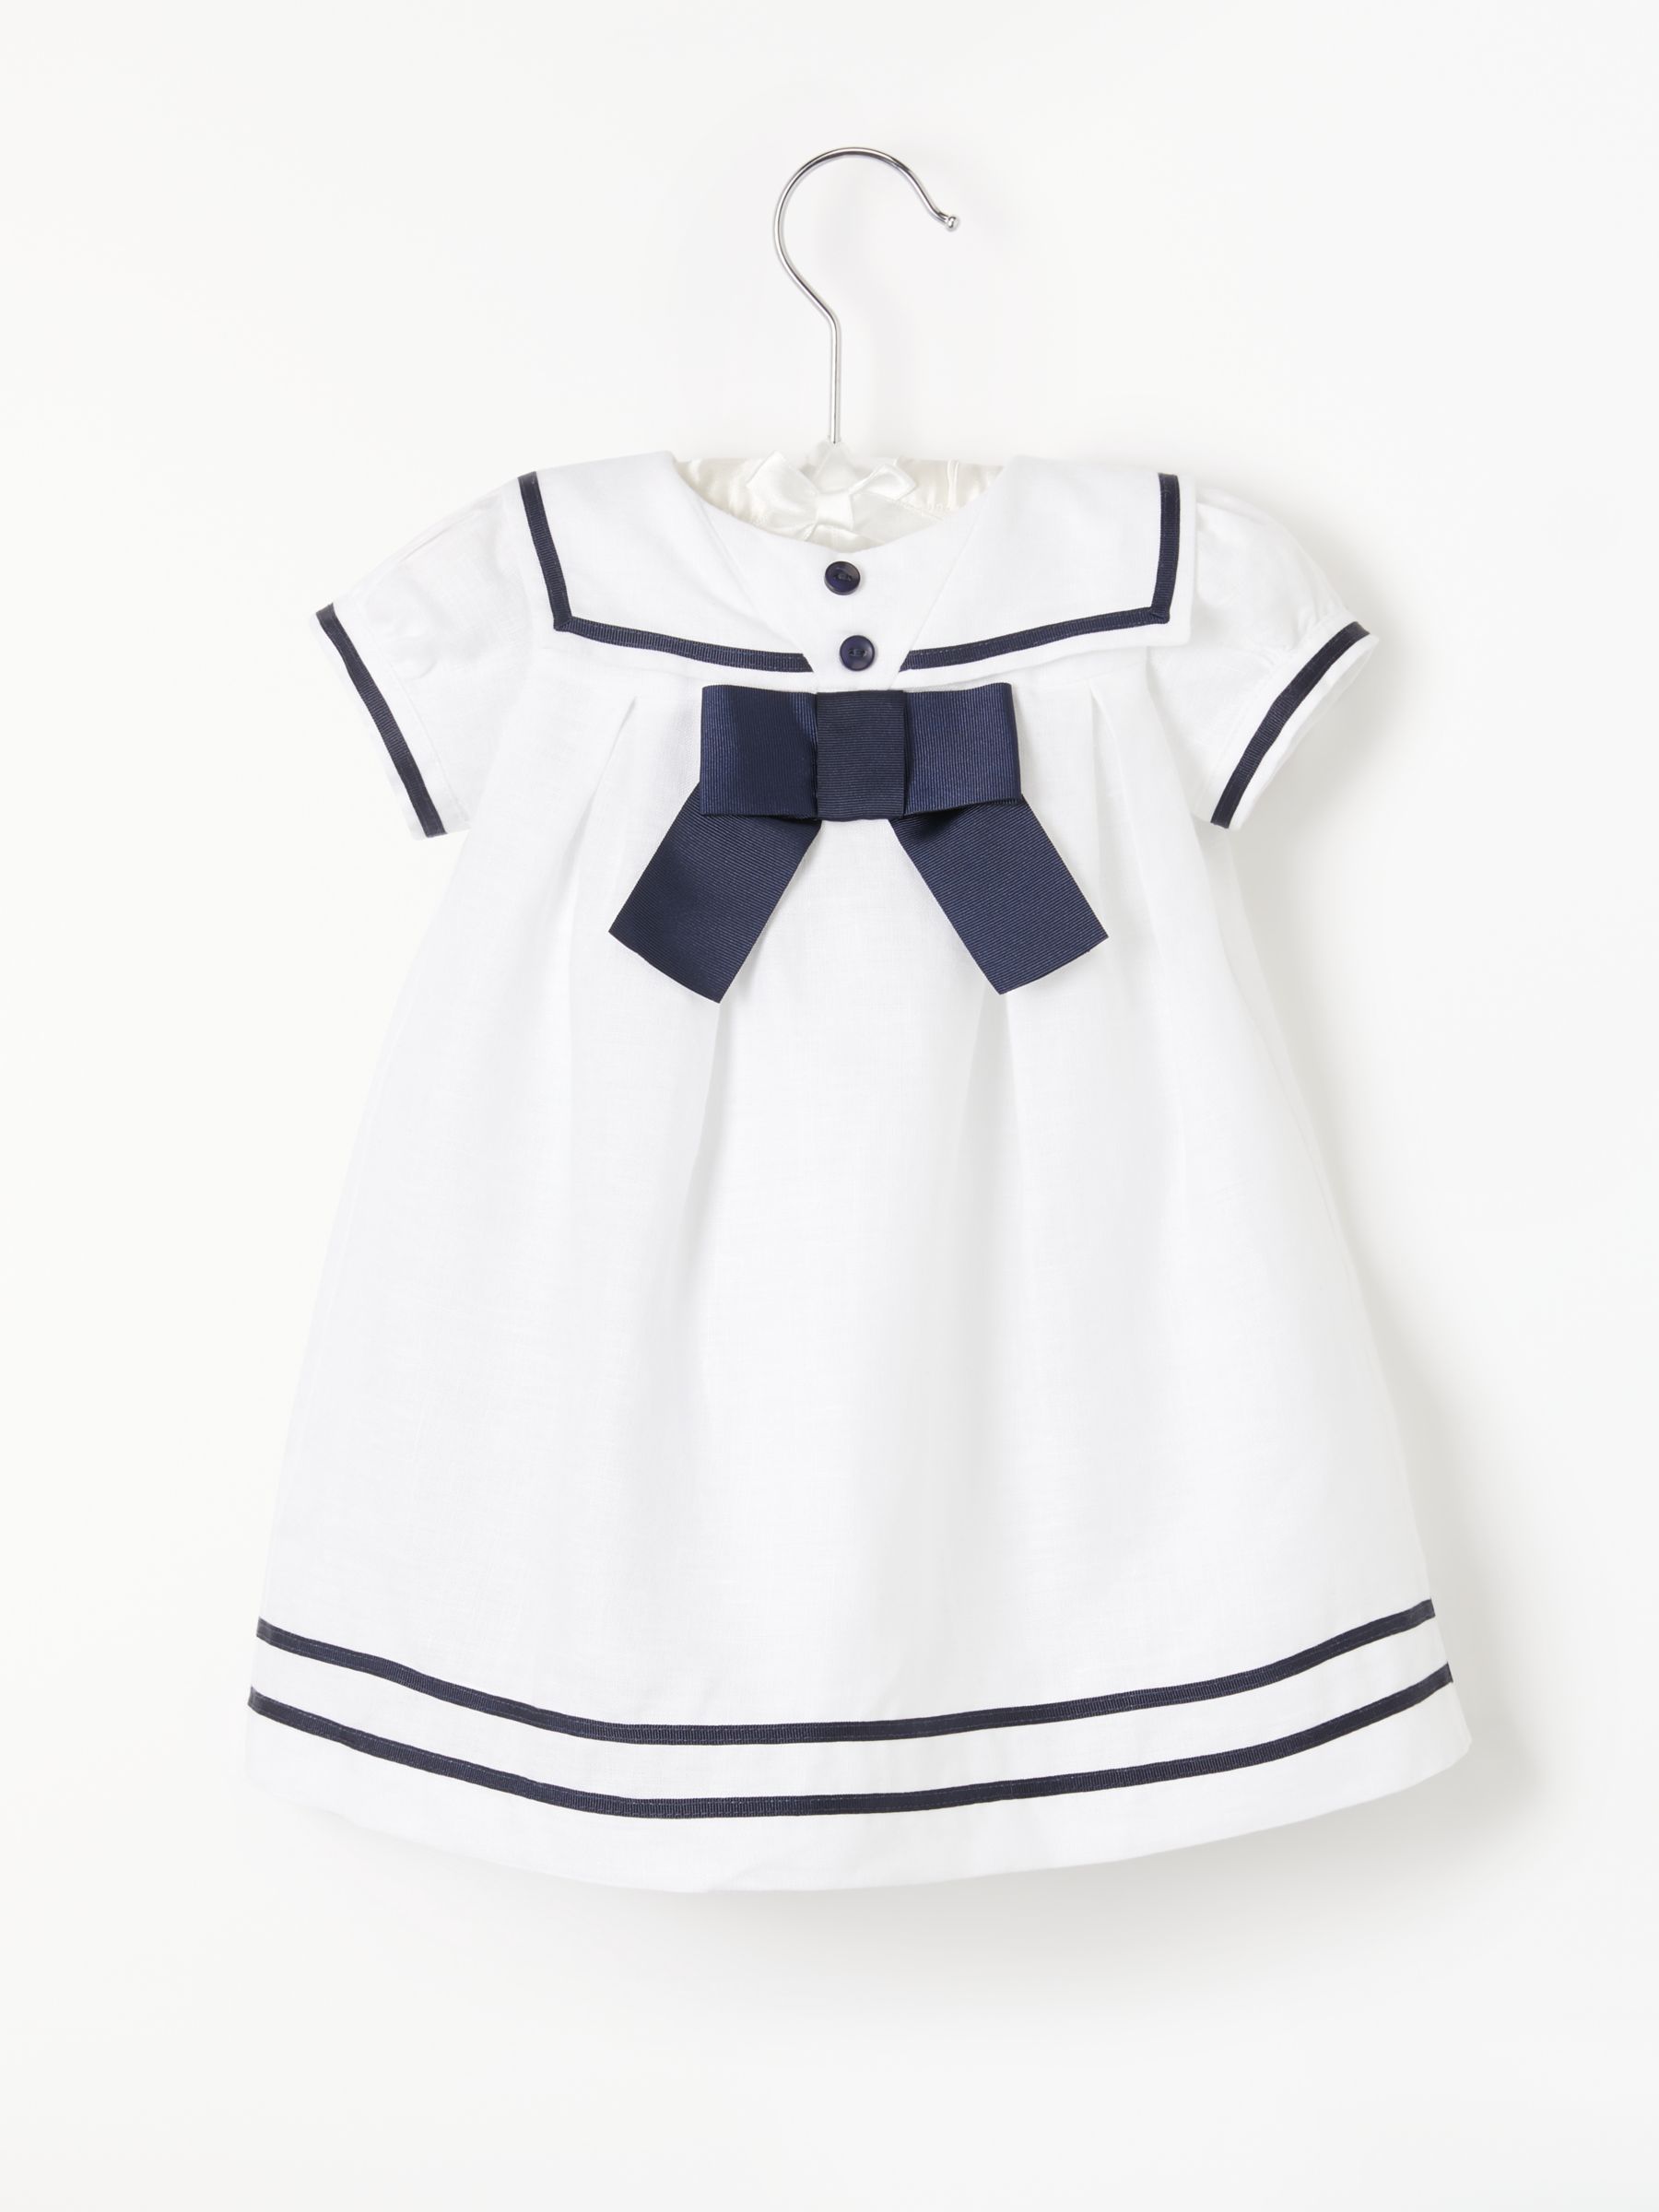 sailor dress baby girl